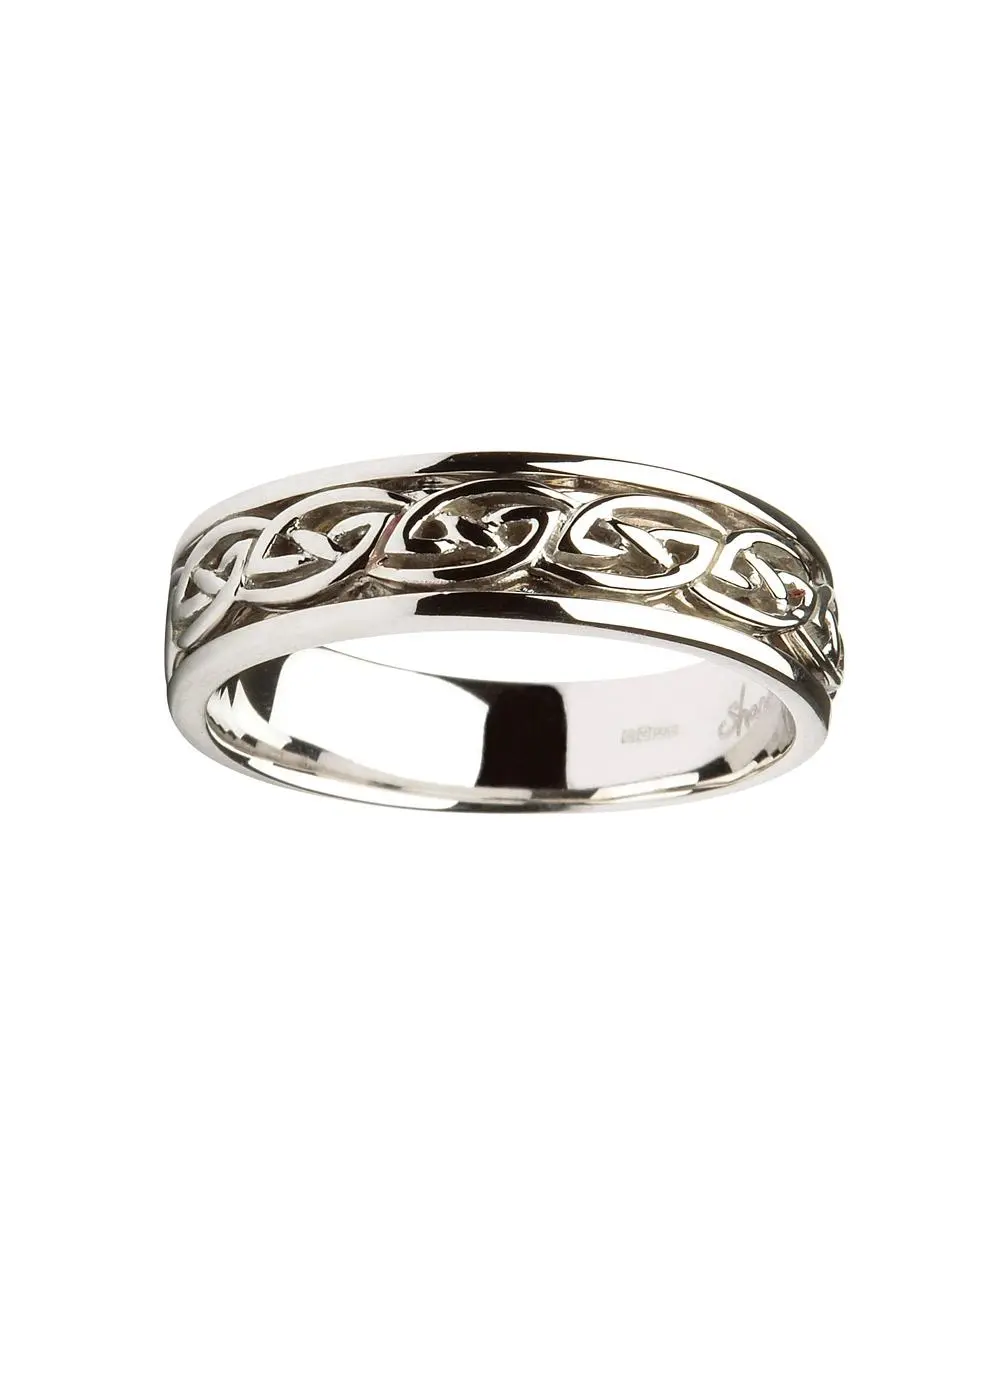 Gents 14K White Gold Celtic Knot Wedding Ring | Blarney